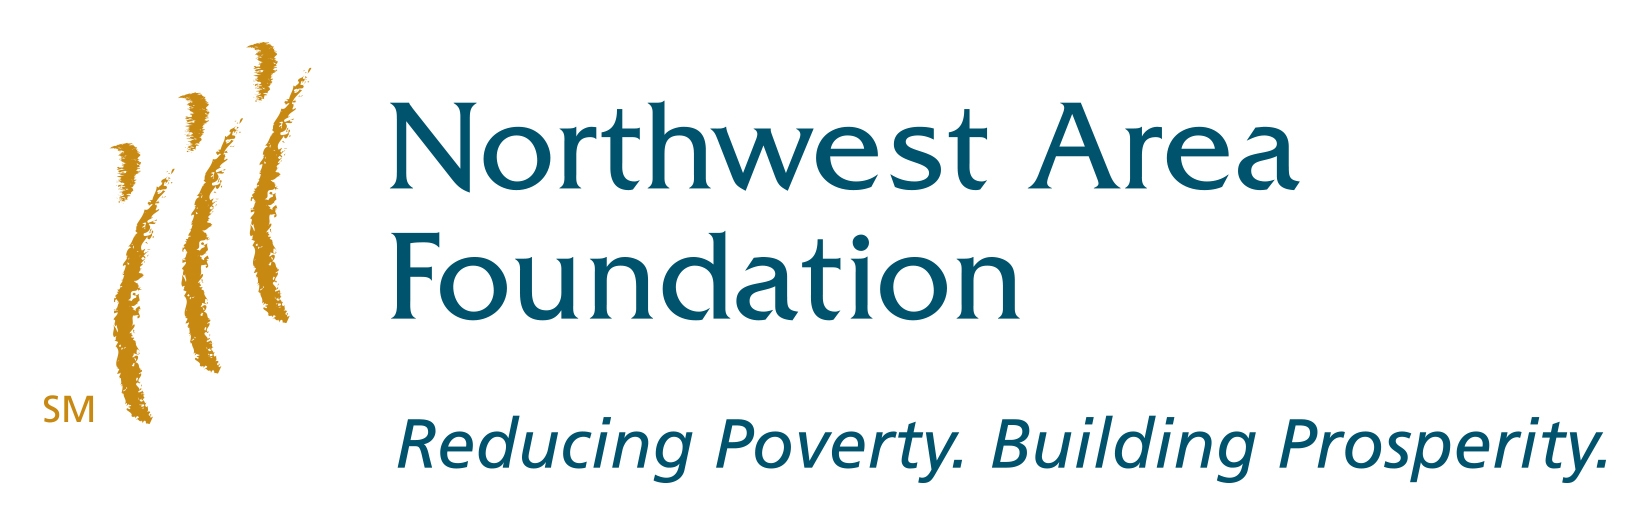 Northwest Area Foundation Spotlights Confluence, Worker Organizing